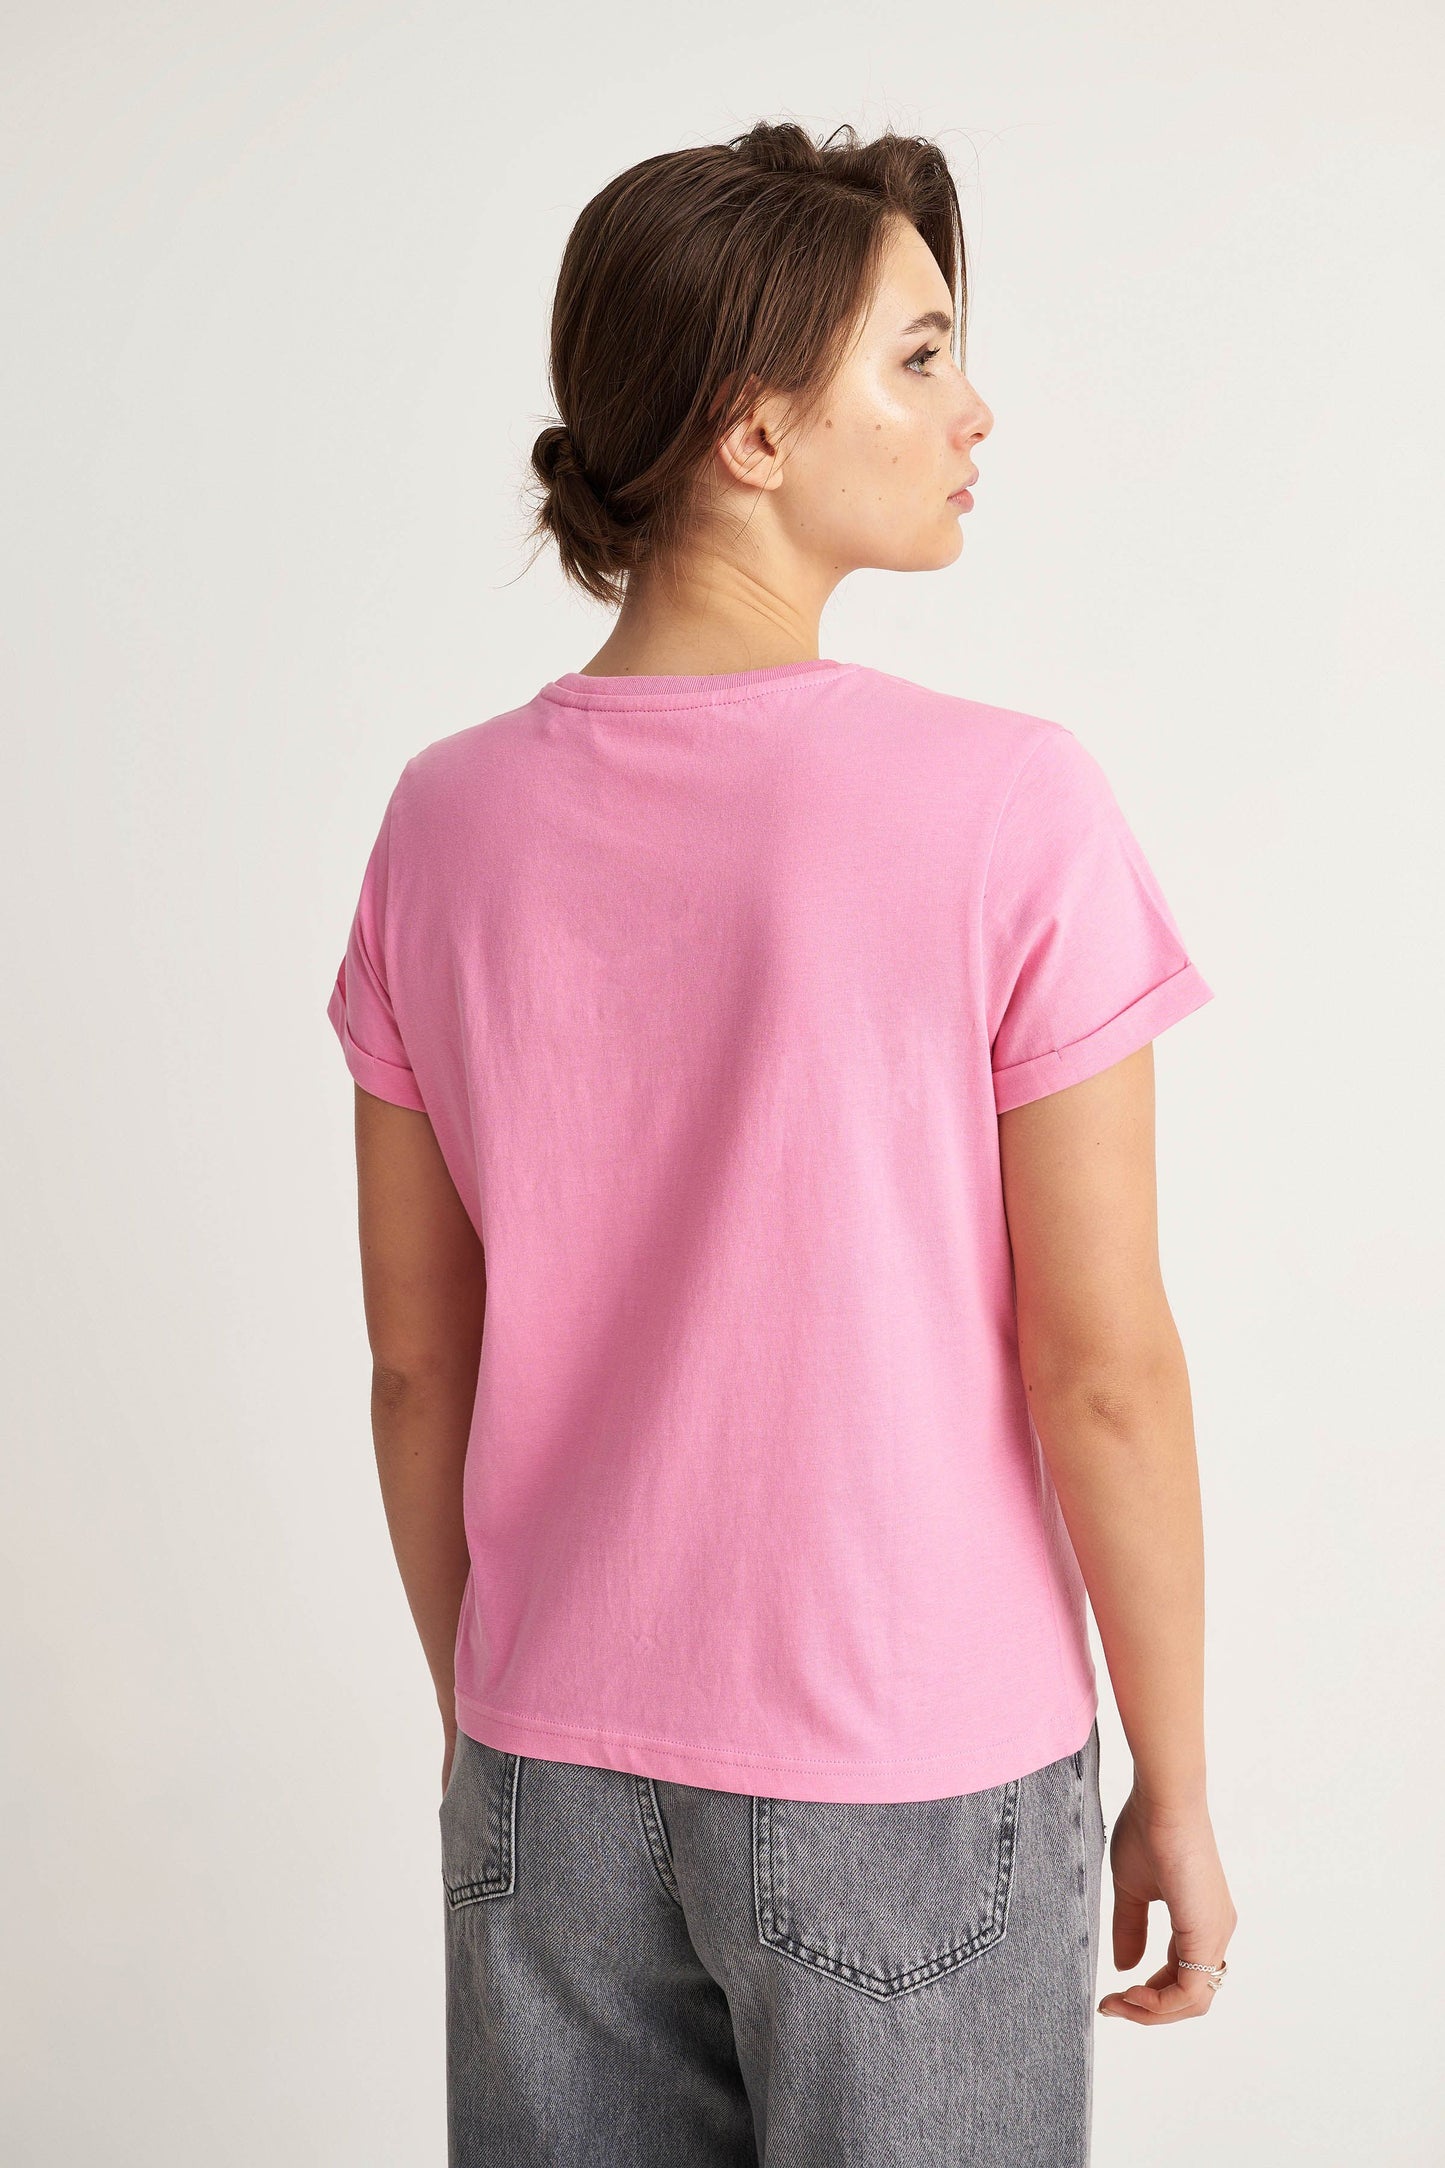 attrattivo - Bluze roze me shkrim